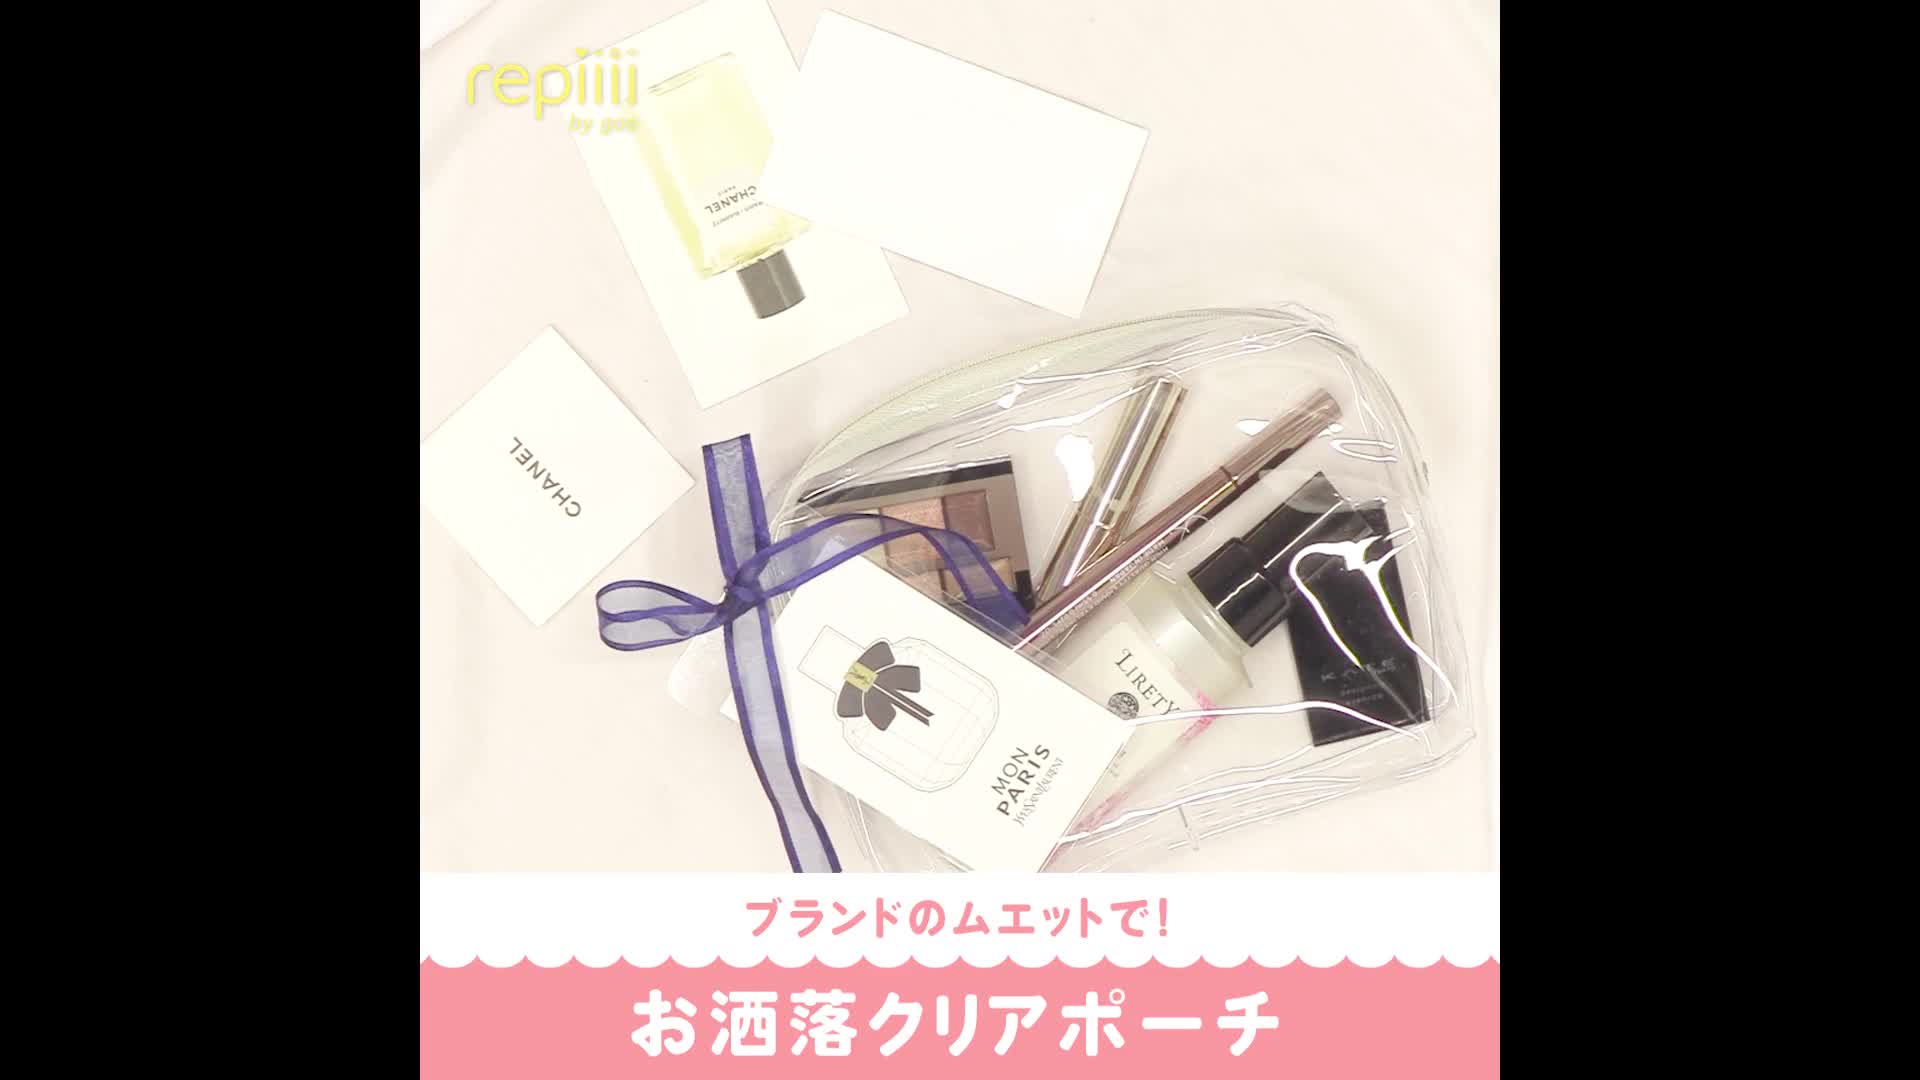 repetto - ♡レペット reppet カブリオレ 3way 美品 ブラック♡の+